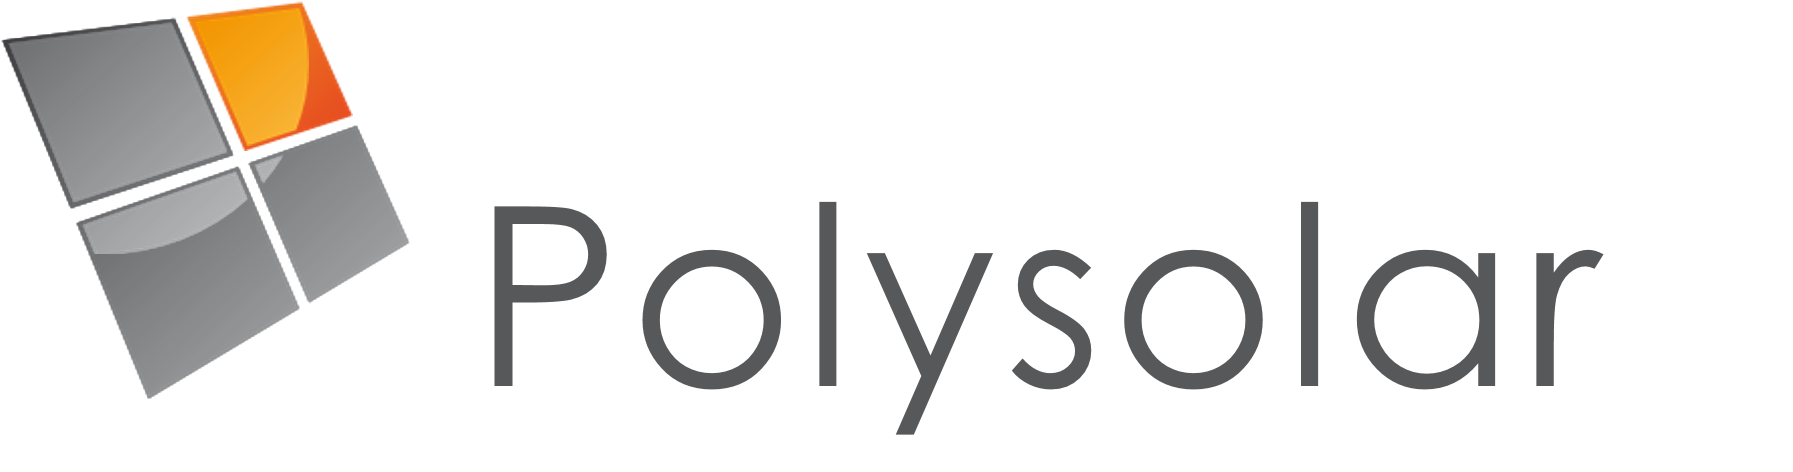 About us Polysolar Technology